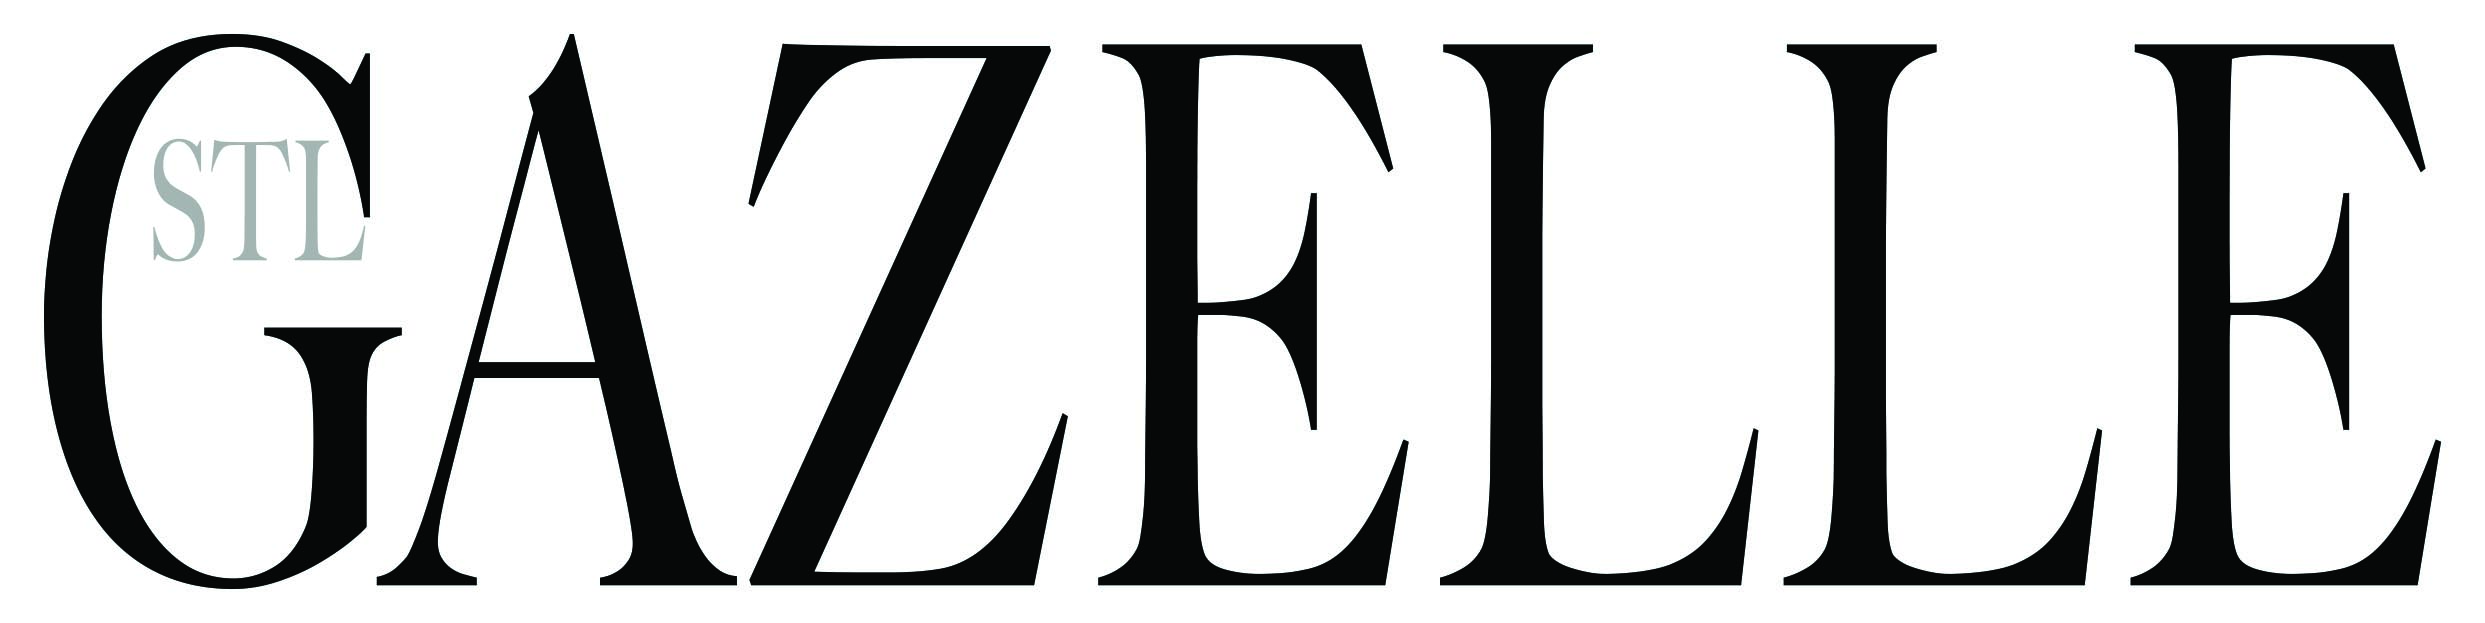 Gazelle-Stl-logo-1.jpg